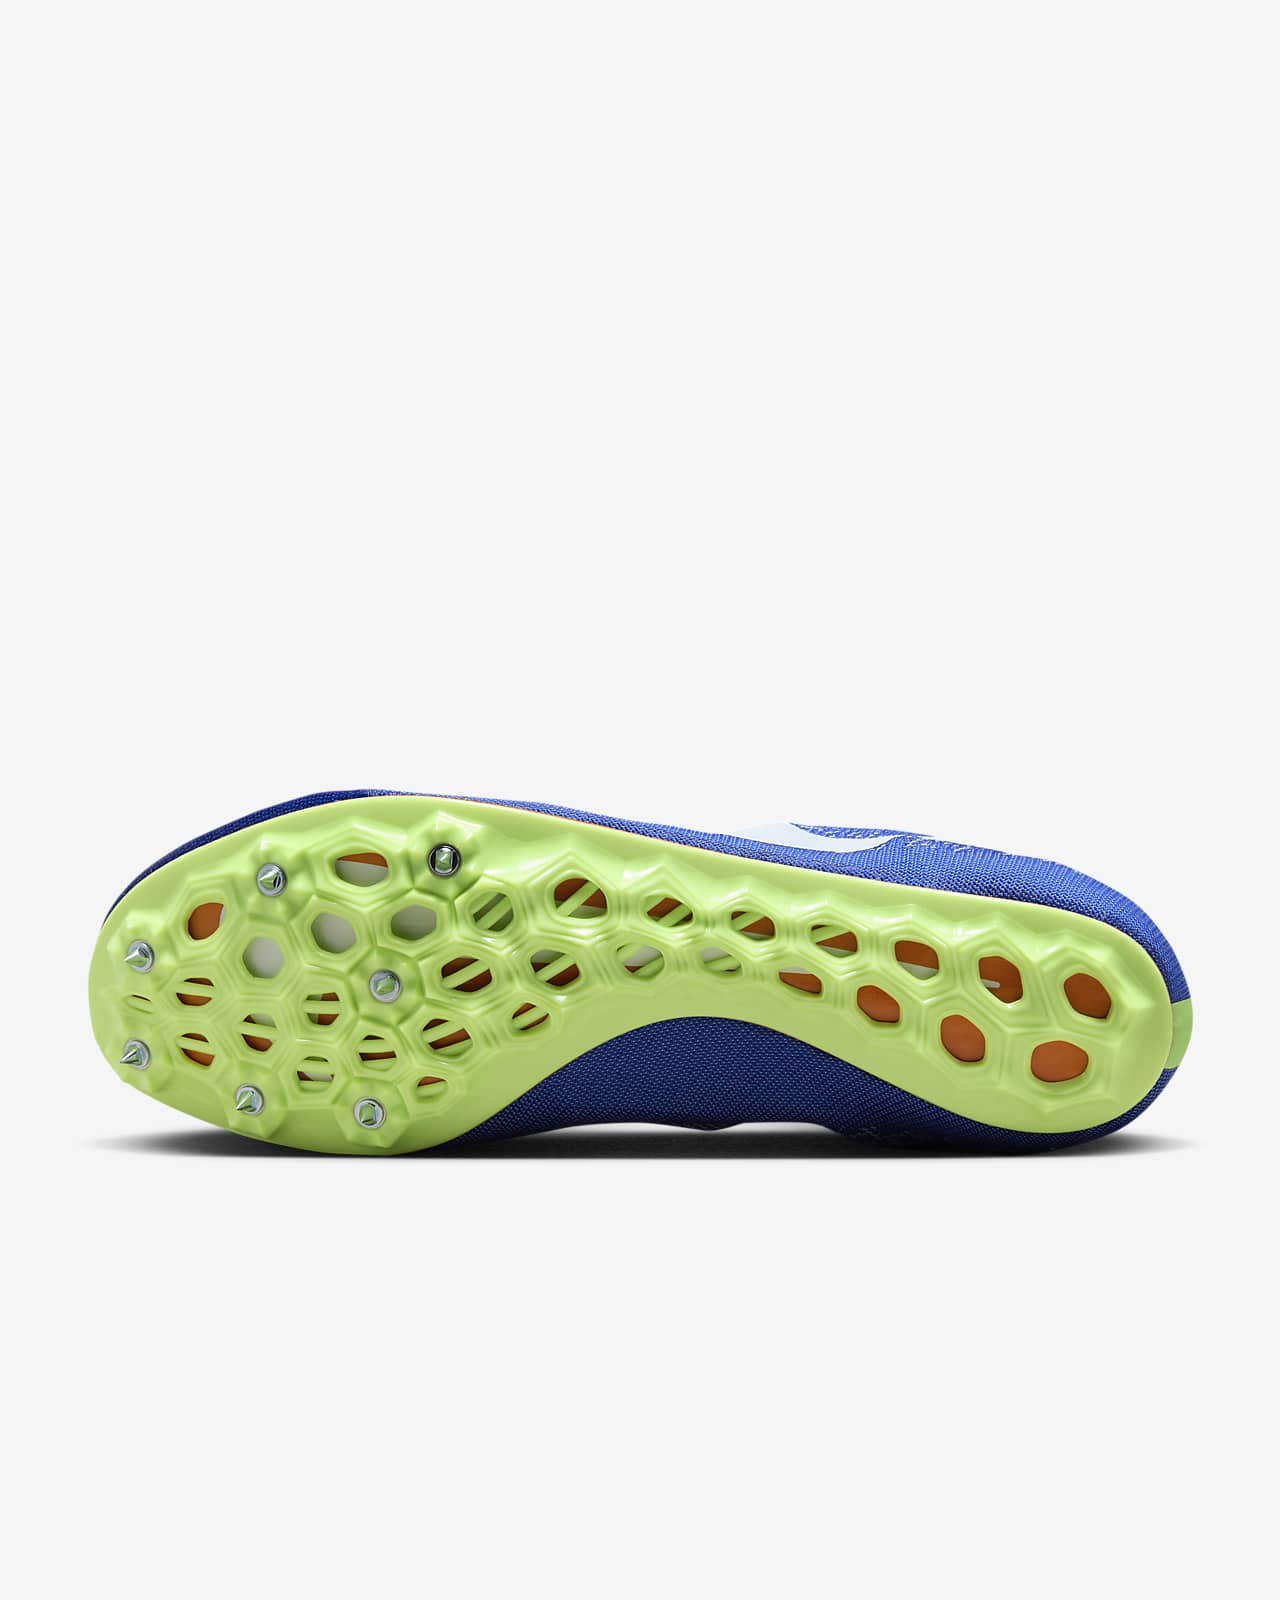 Nike Ja Fly 4 田徑短跑釘鞋。Nike TW